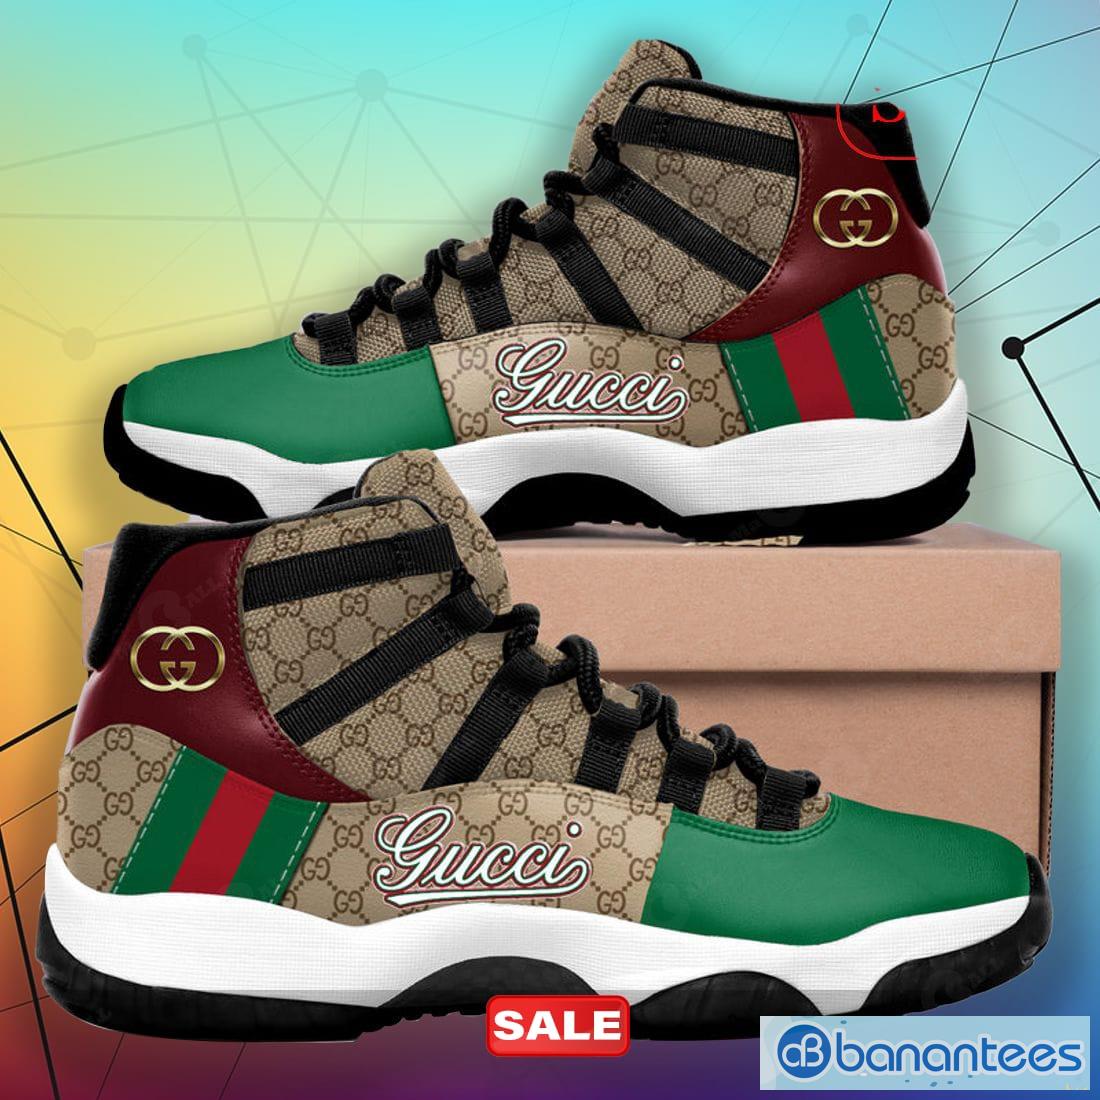 Gucci Stripe Air Jordan 11 Shoes Gifts Women Sneakers - Banantees